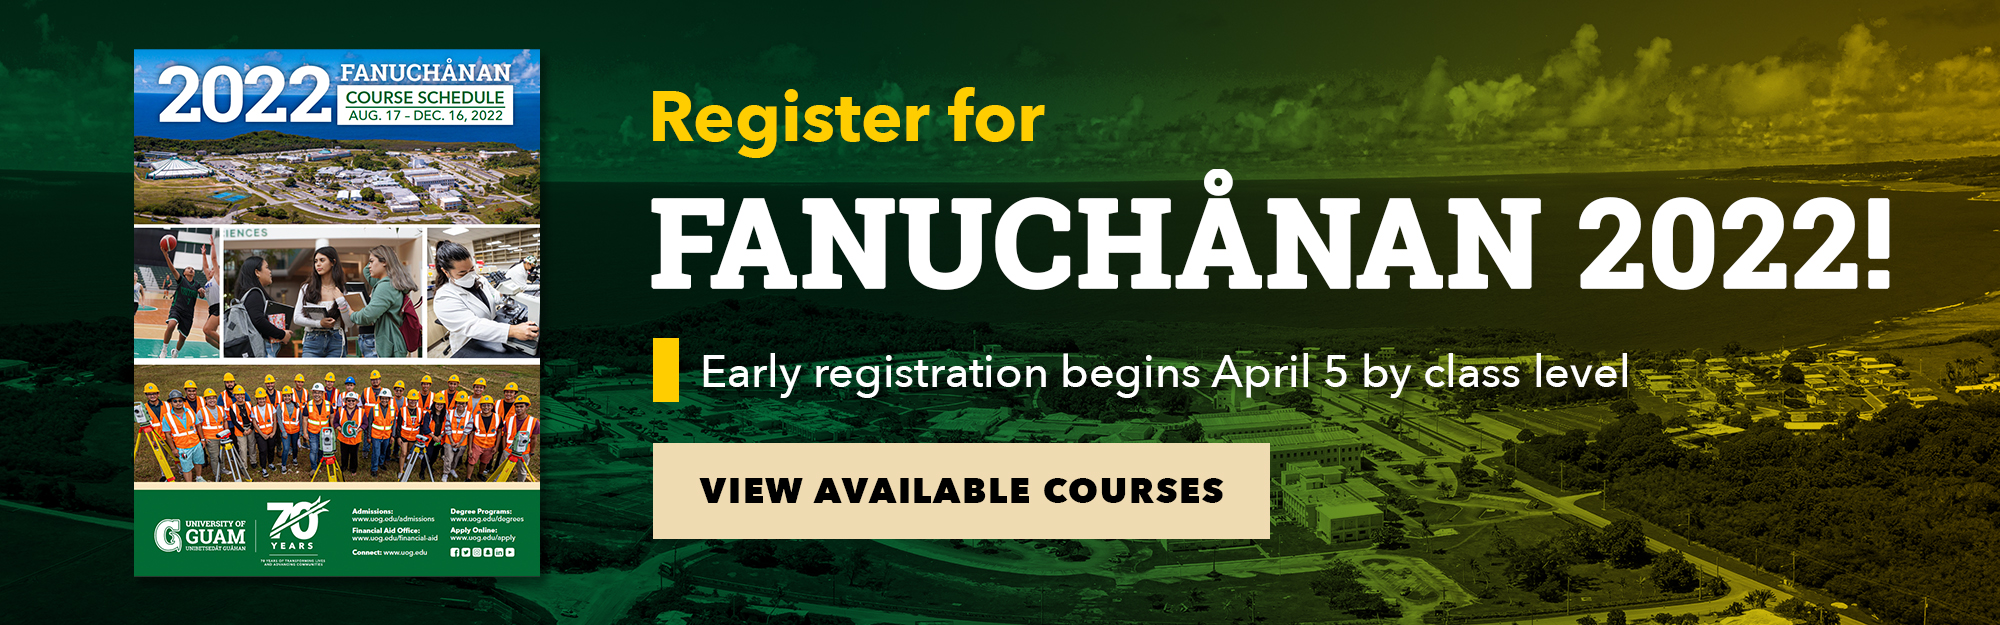 Fanuchanan 2021 Course Schedule